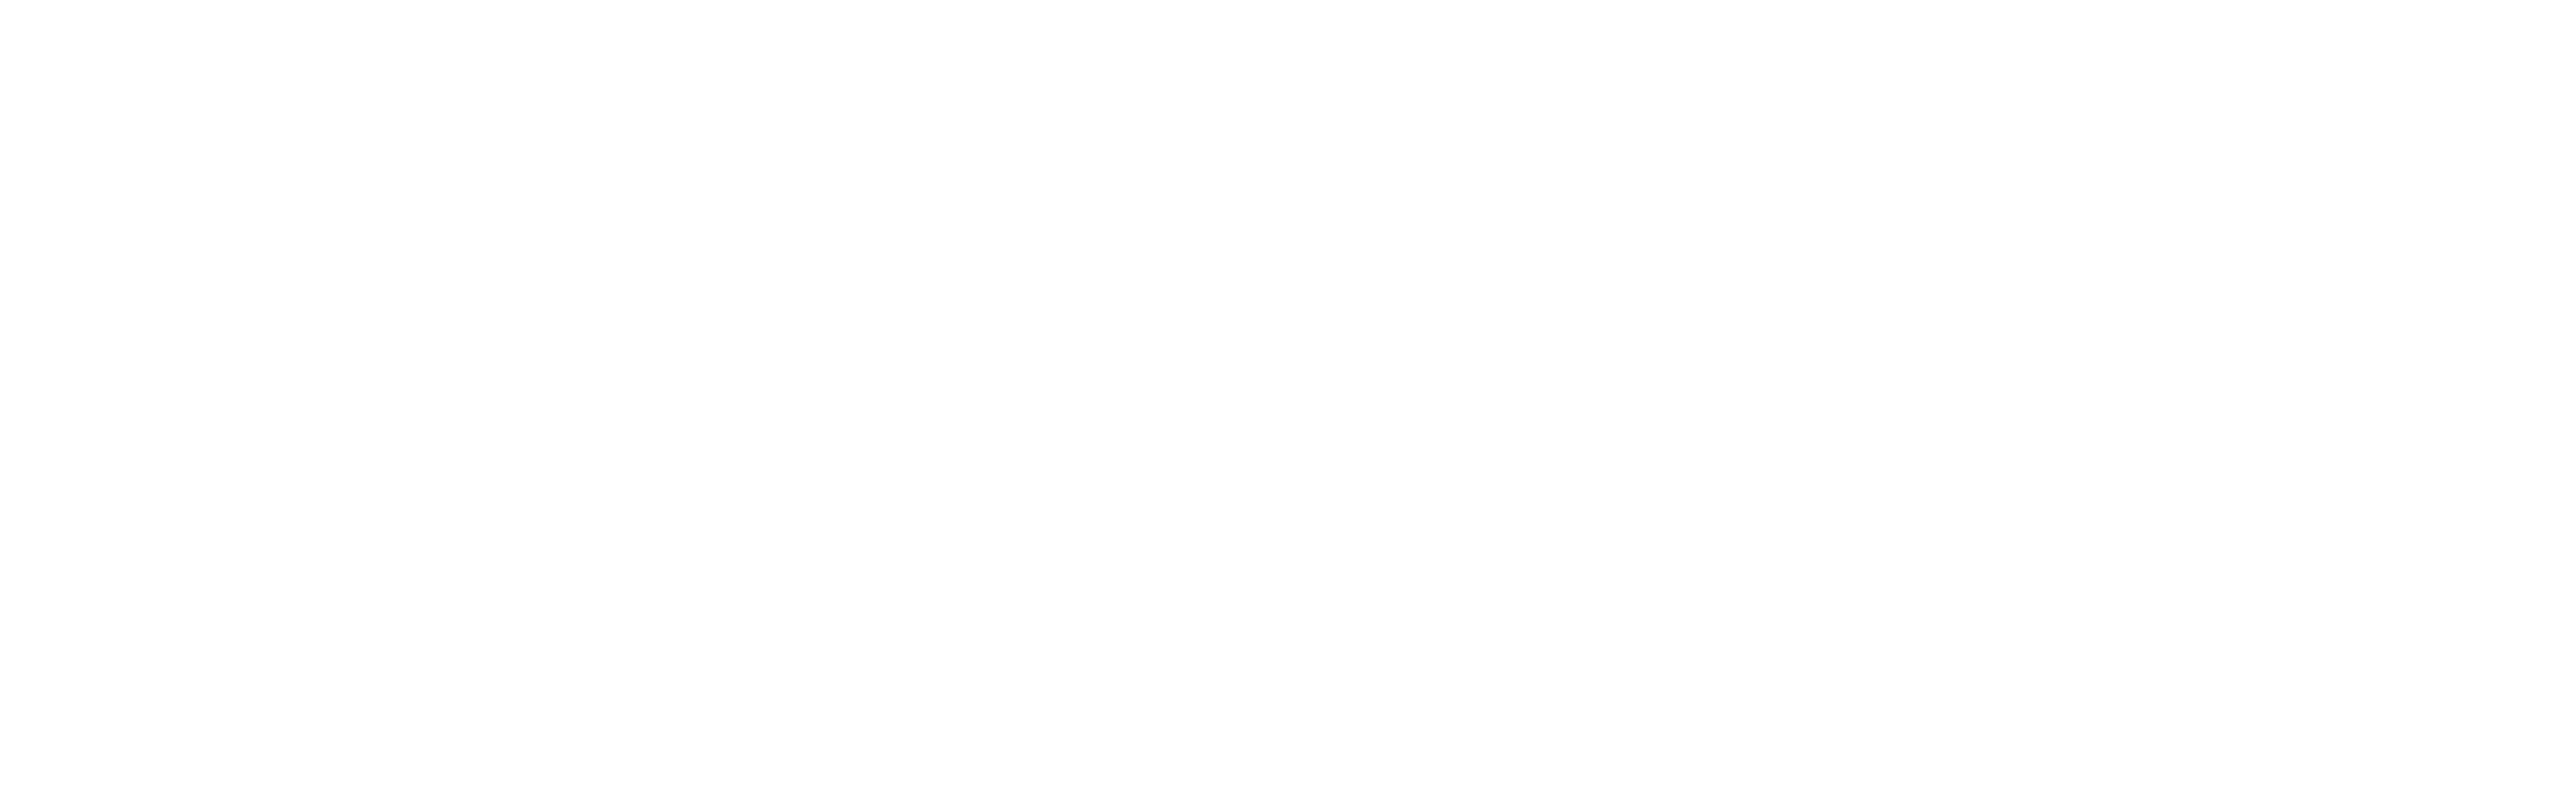 trello logo black and white svg